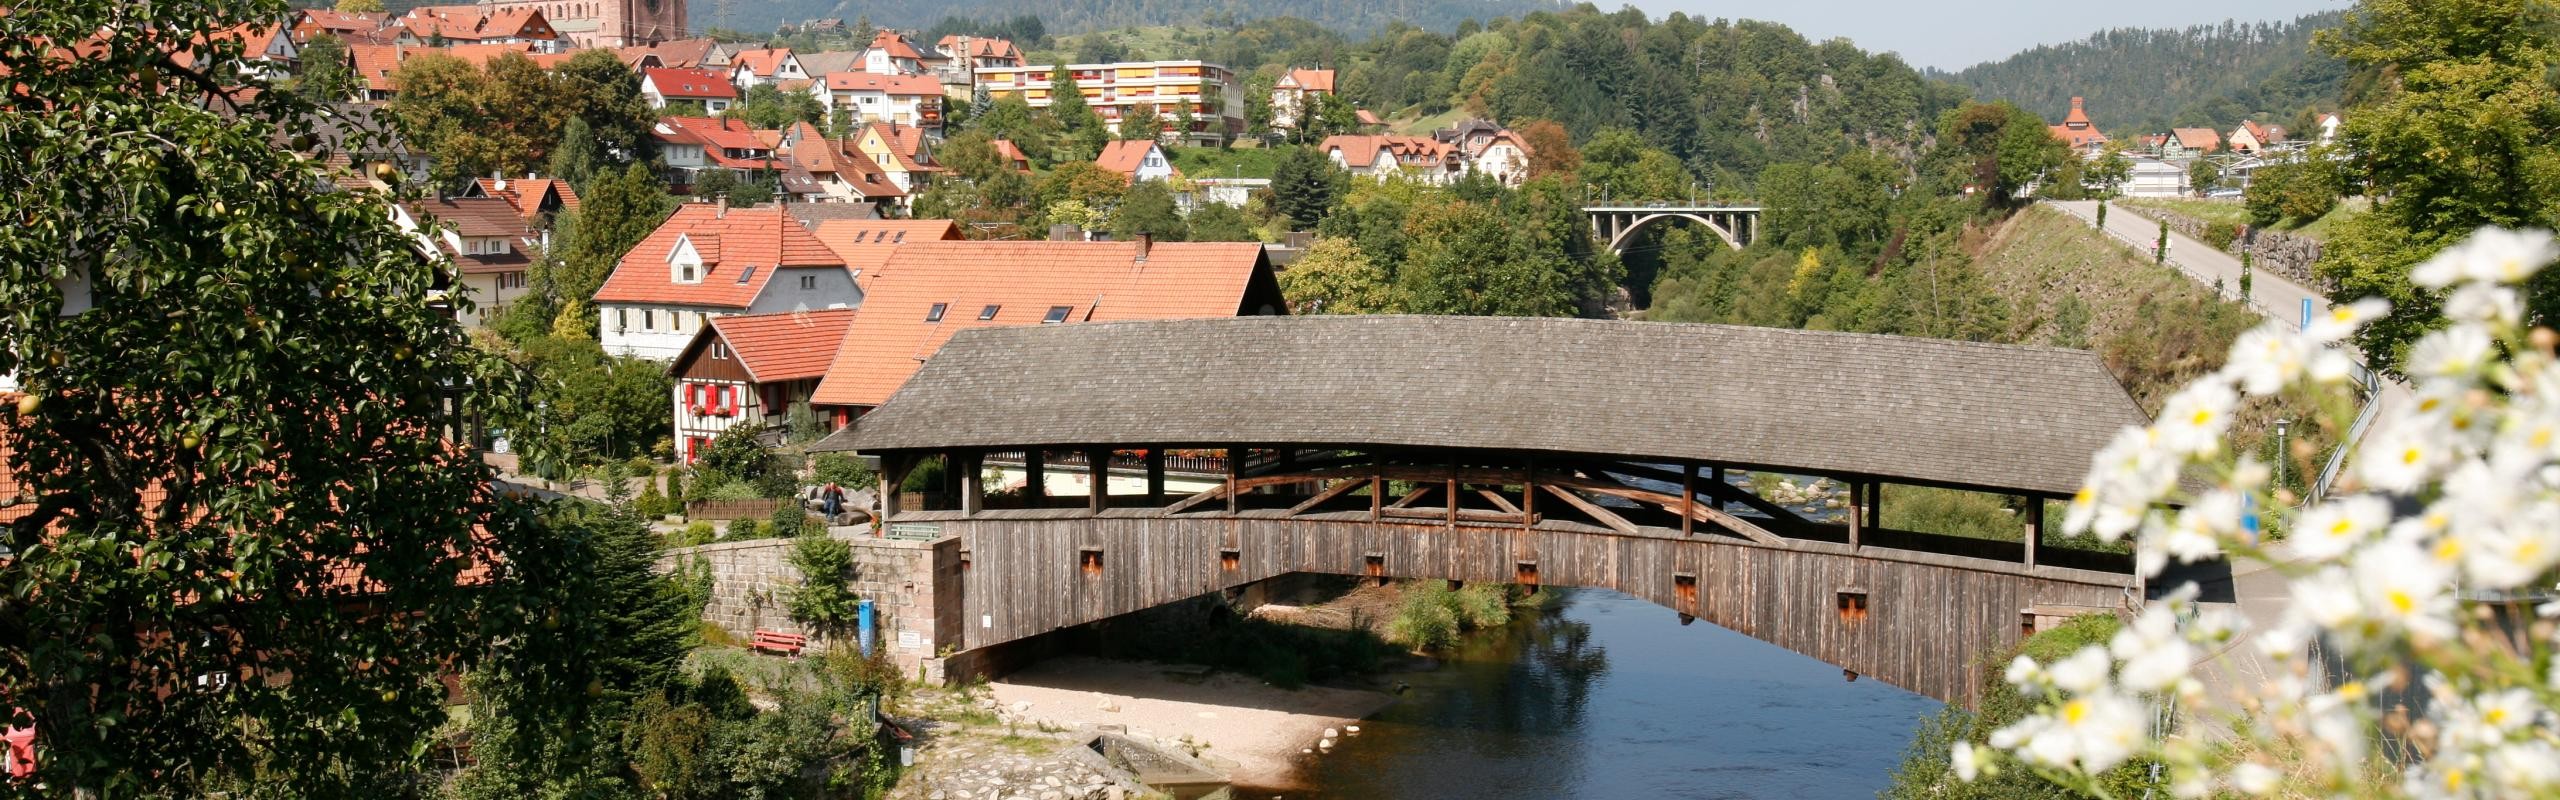 Blick auf die Forbacher Holzbrücke